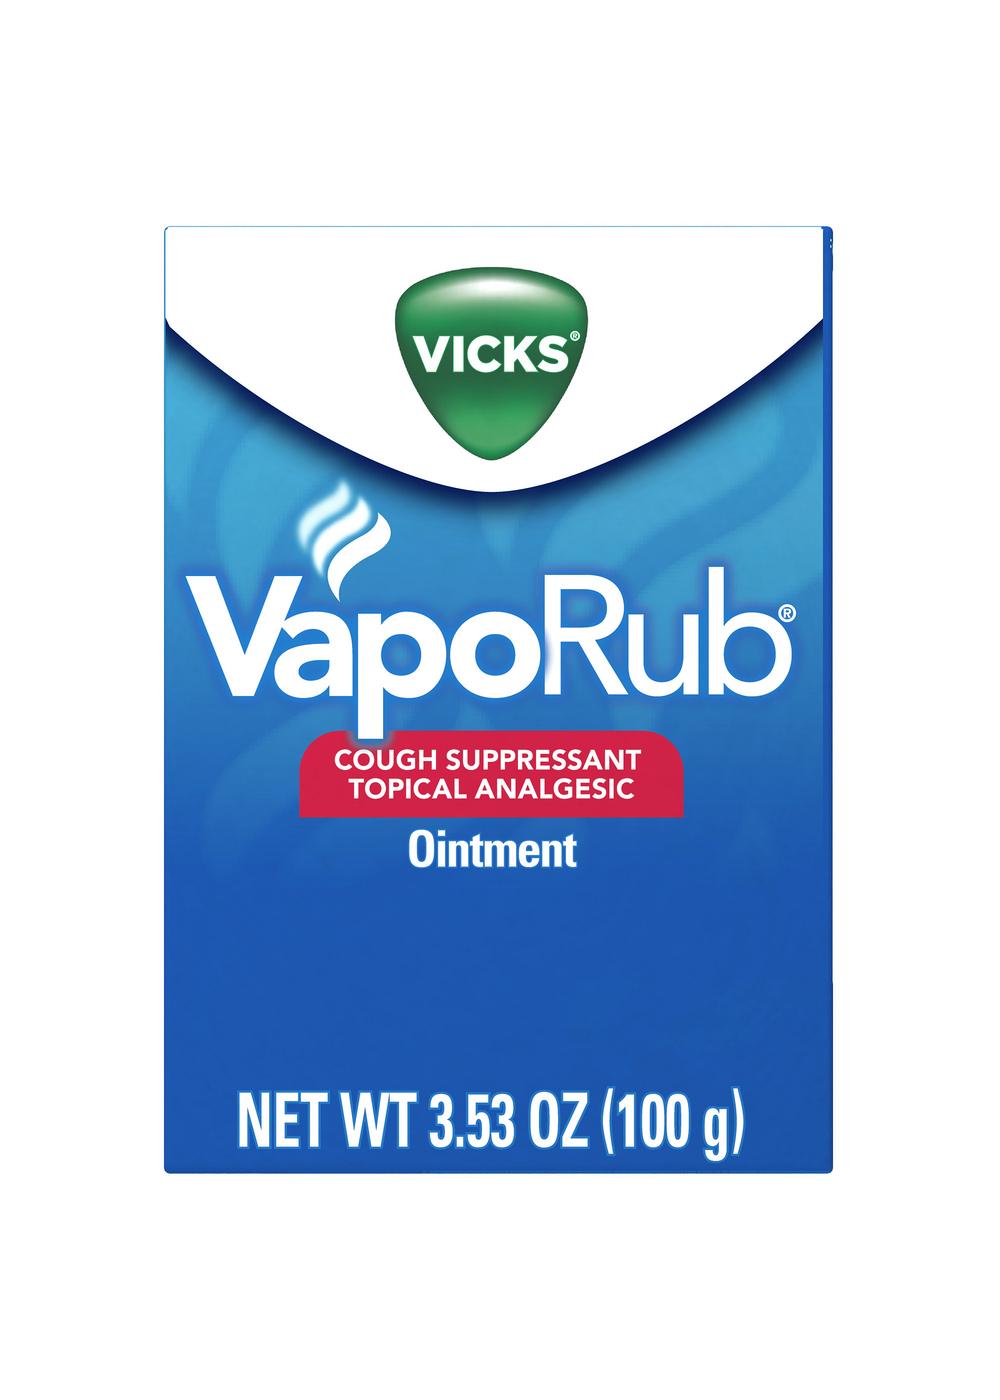 Vicks VapoRub Ointment; image 1 of 11